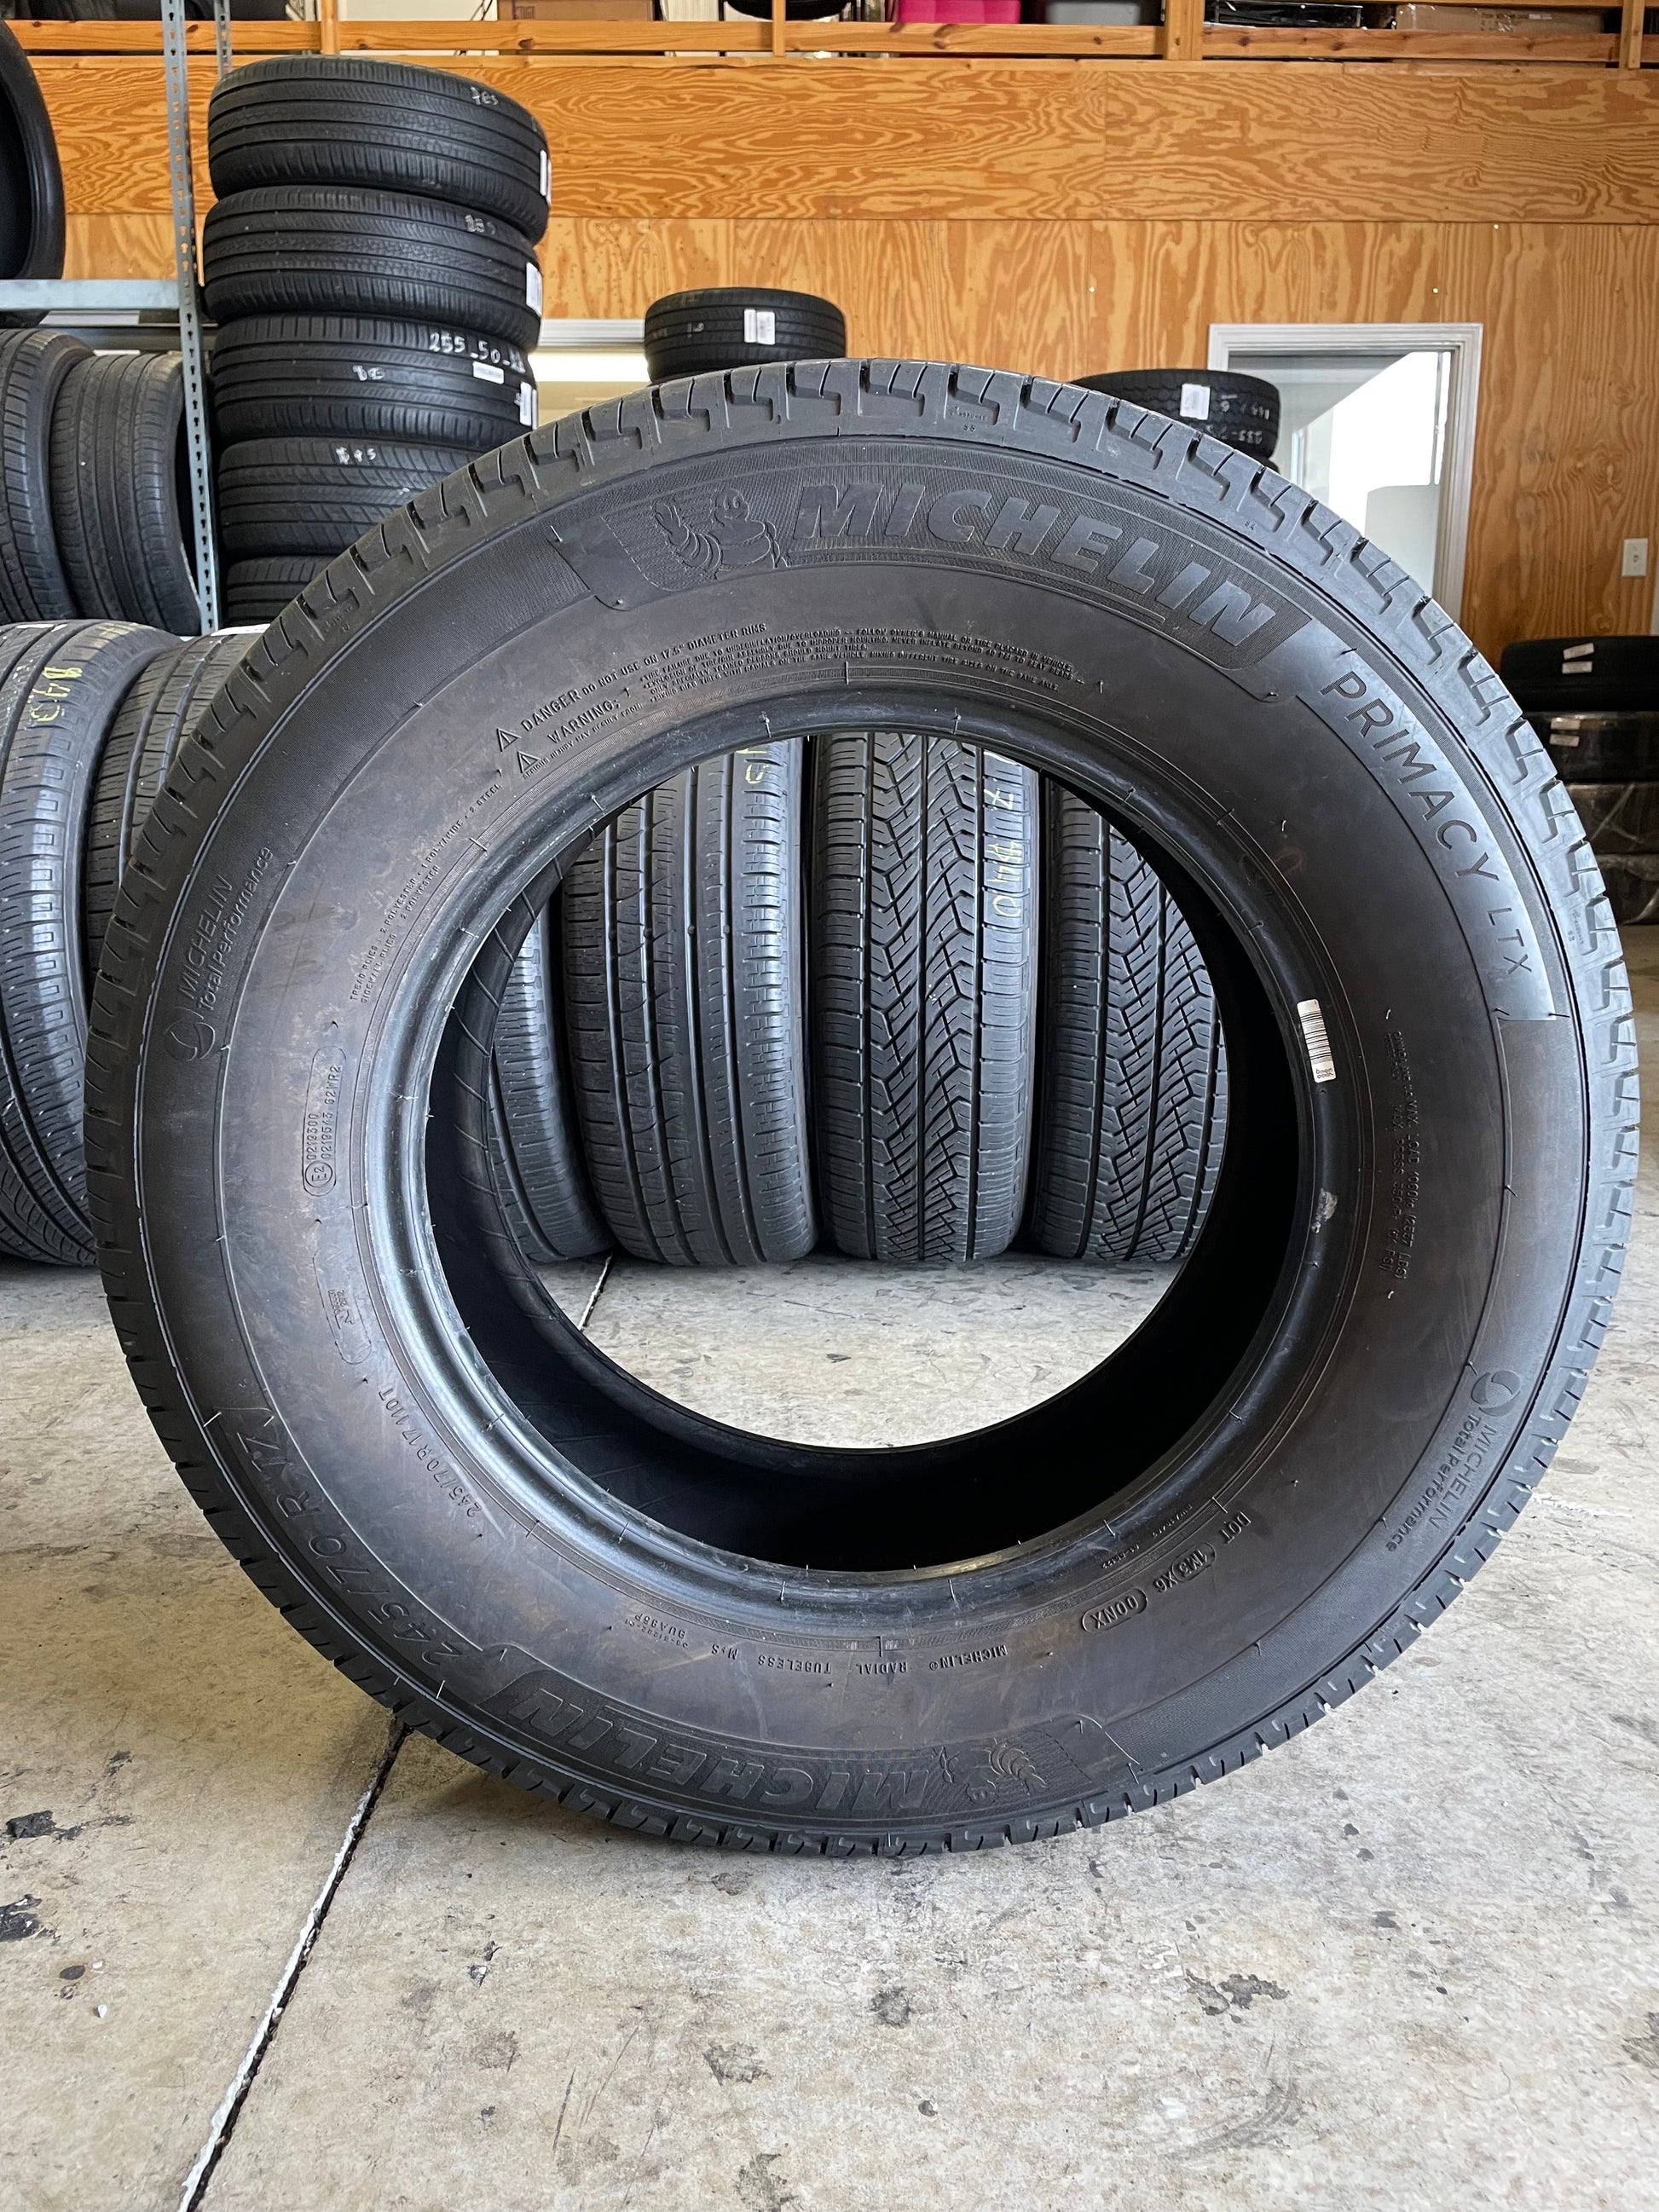 SINGLE 245/70R17 Michelin Primacy LTX 110 T SL - Premium Used Tires